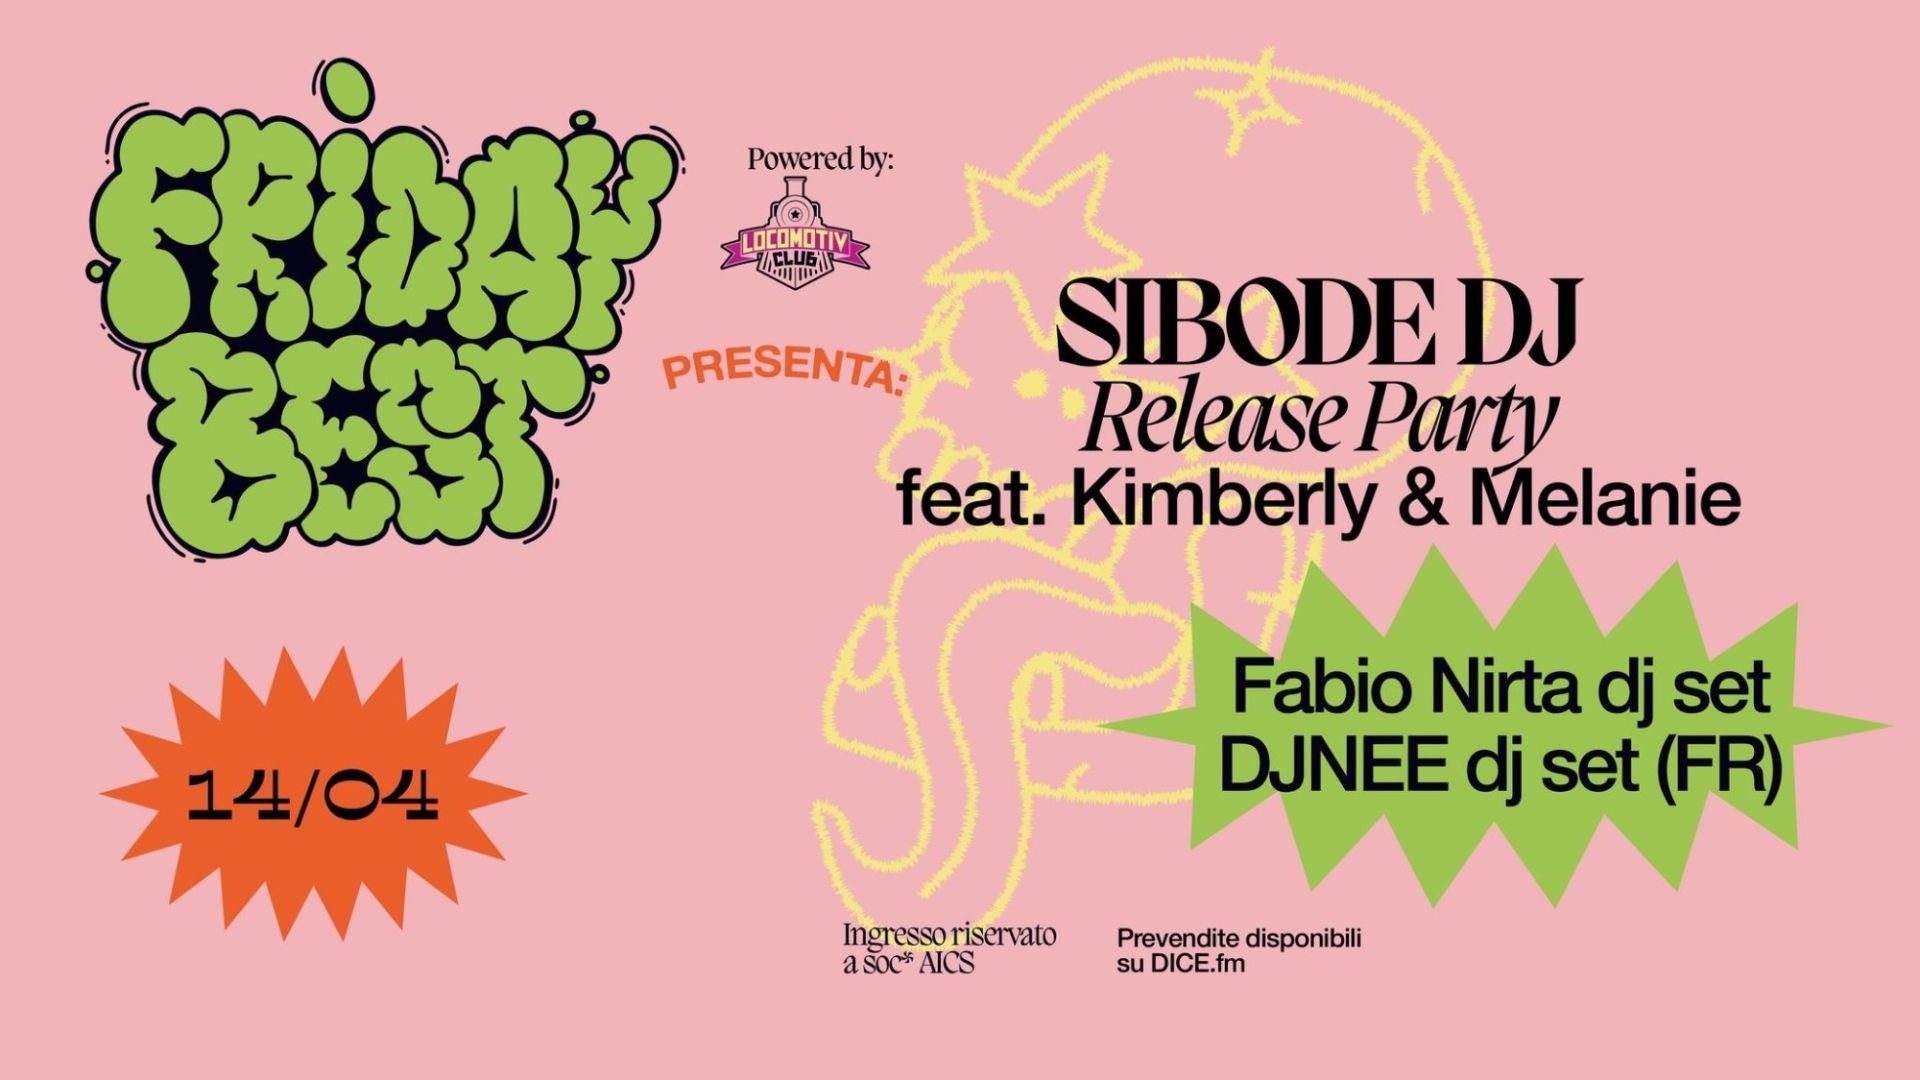 Sibode Dj - release party / Fabio Nirta djset / Djnee djset